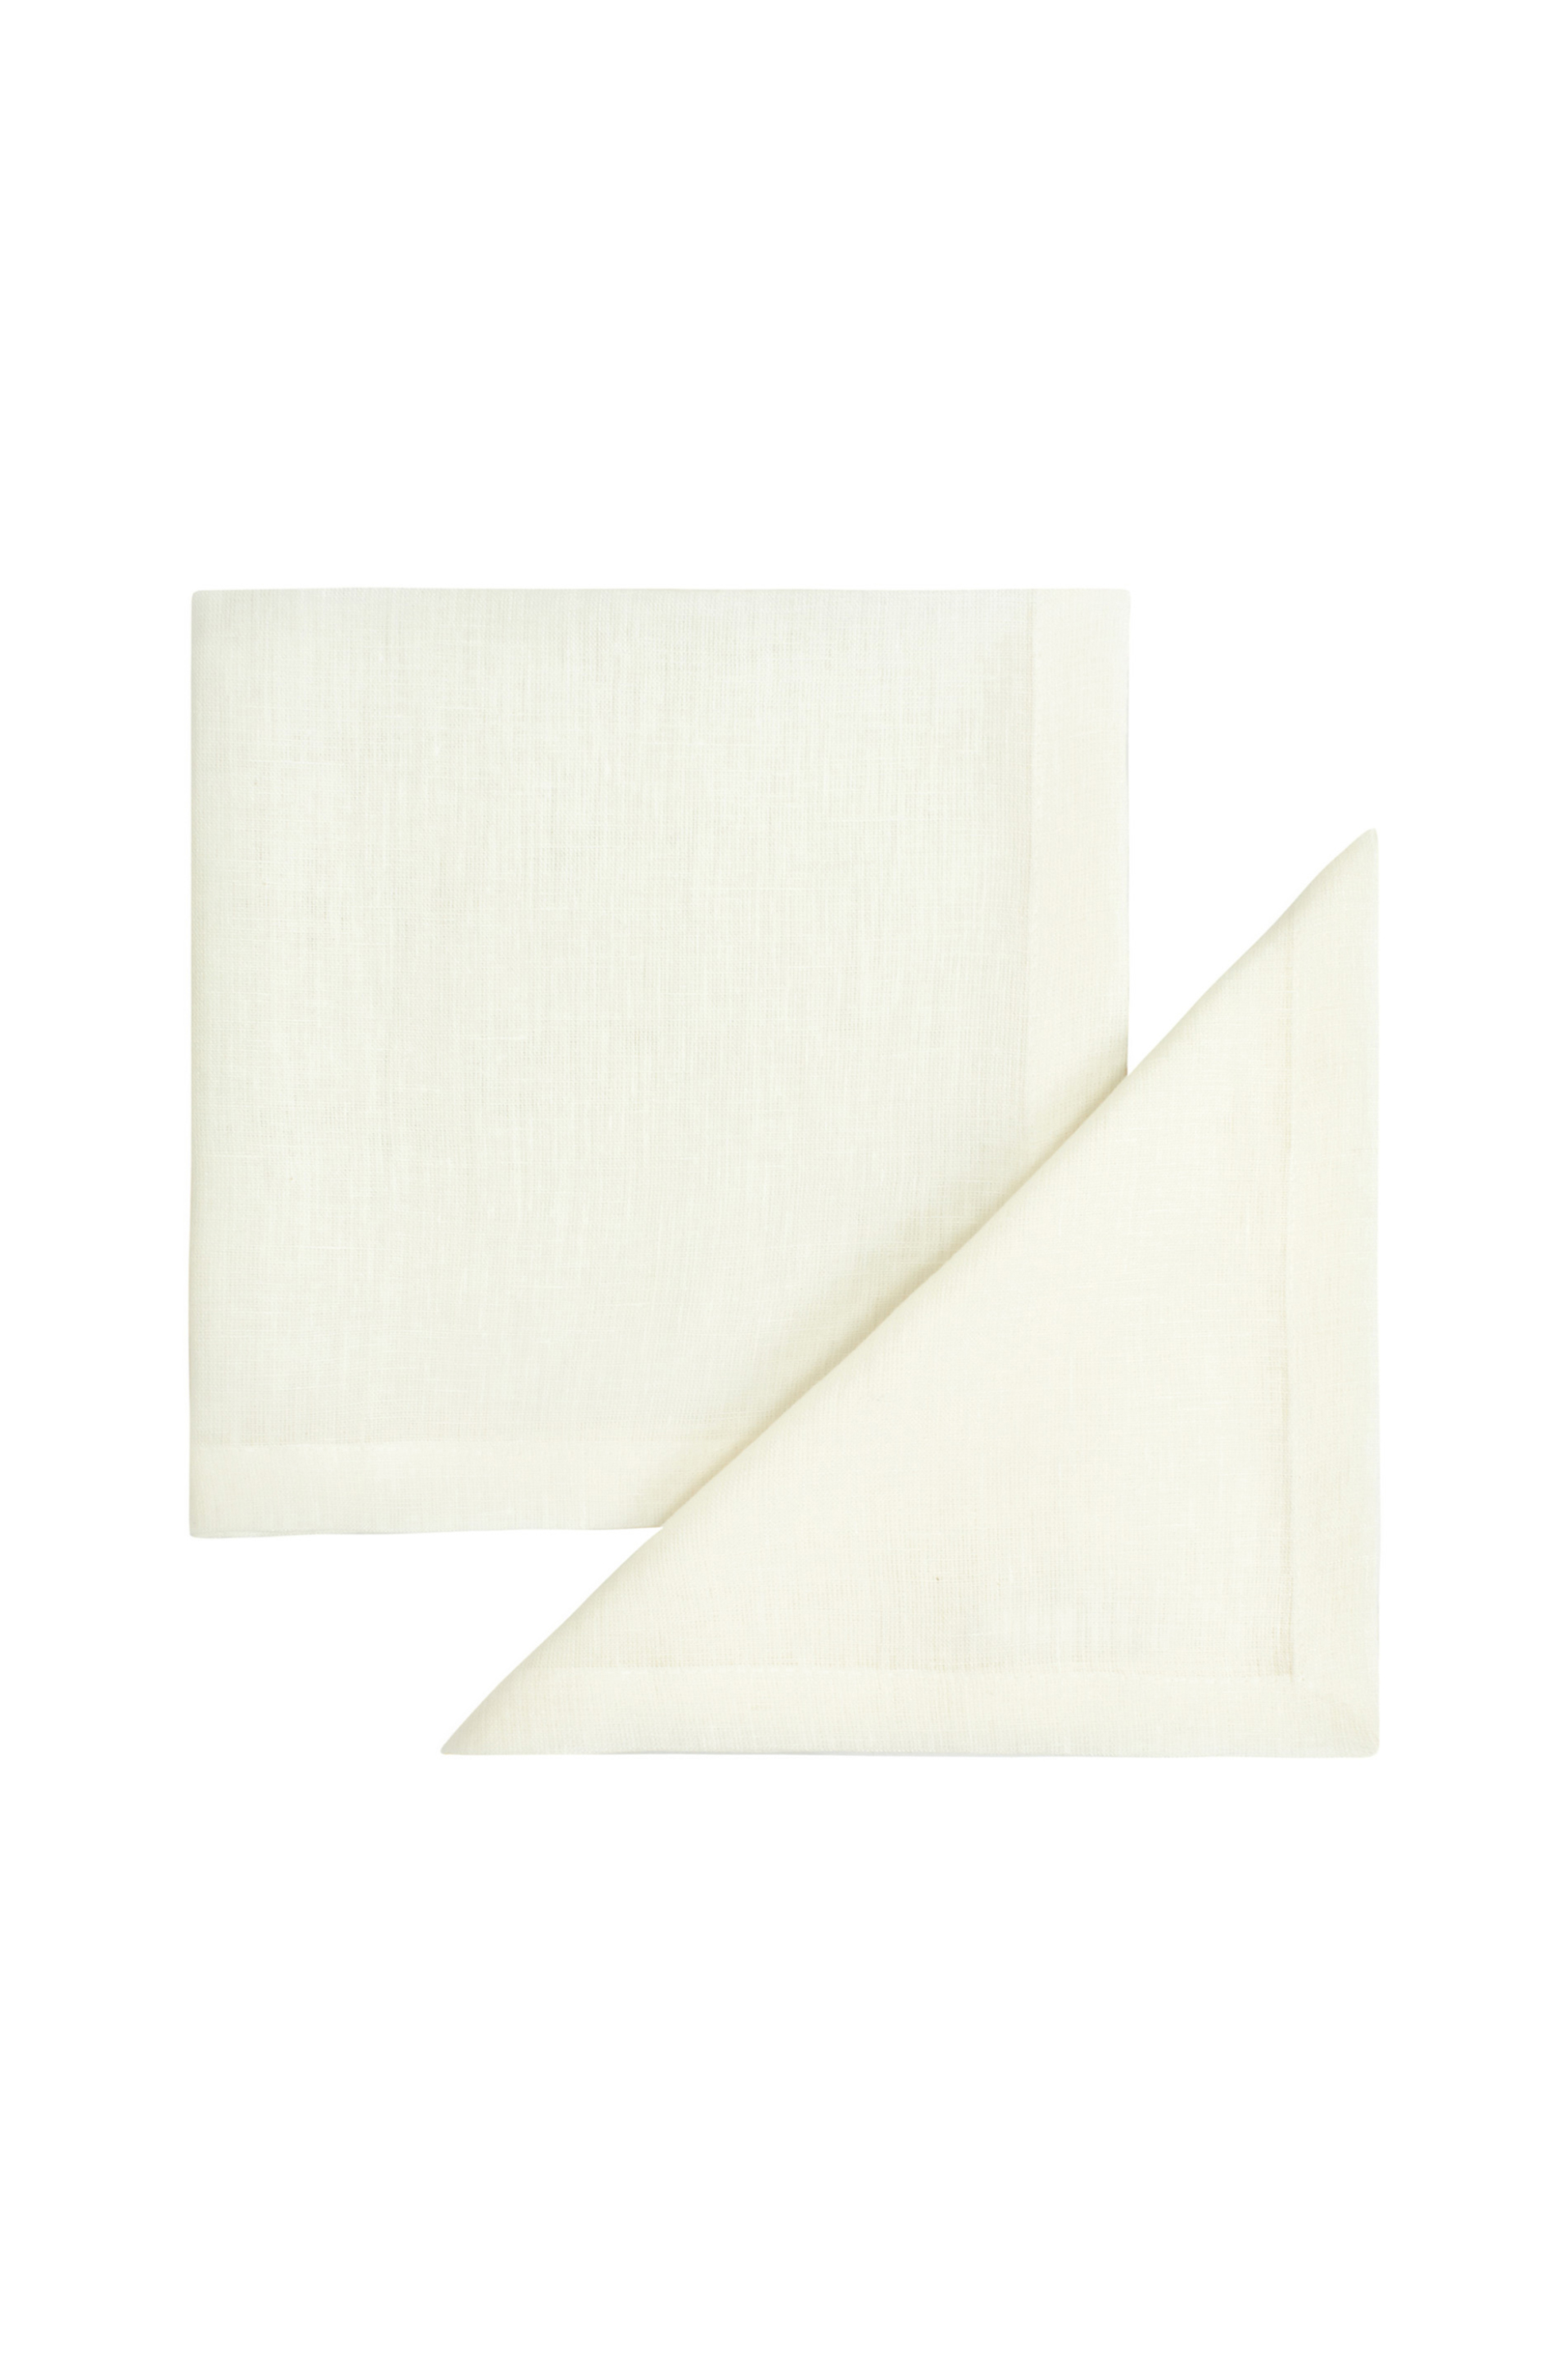 Coincasa σετ 2 λινές πετσέτες μονόχρωμες 42 x 42 cm - 006665376 Εκρού 2-7054005092|EE0248|